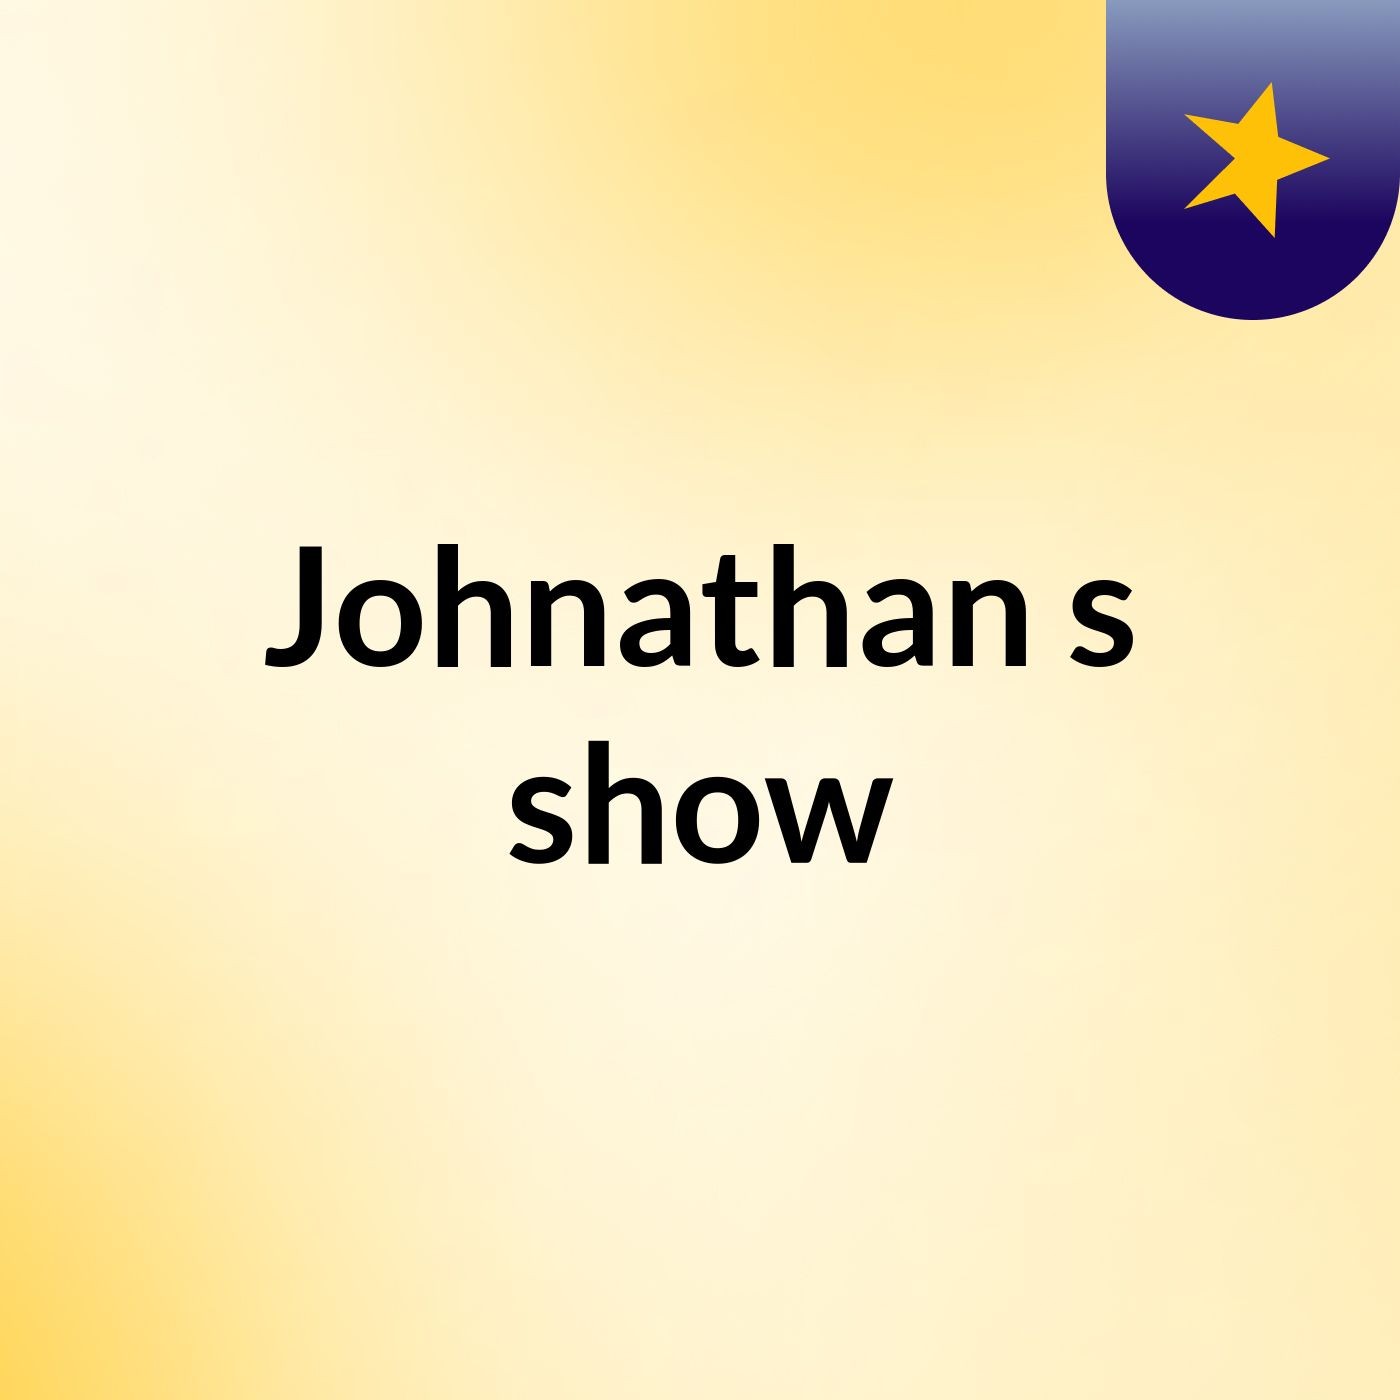 Johnathan's show